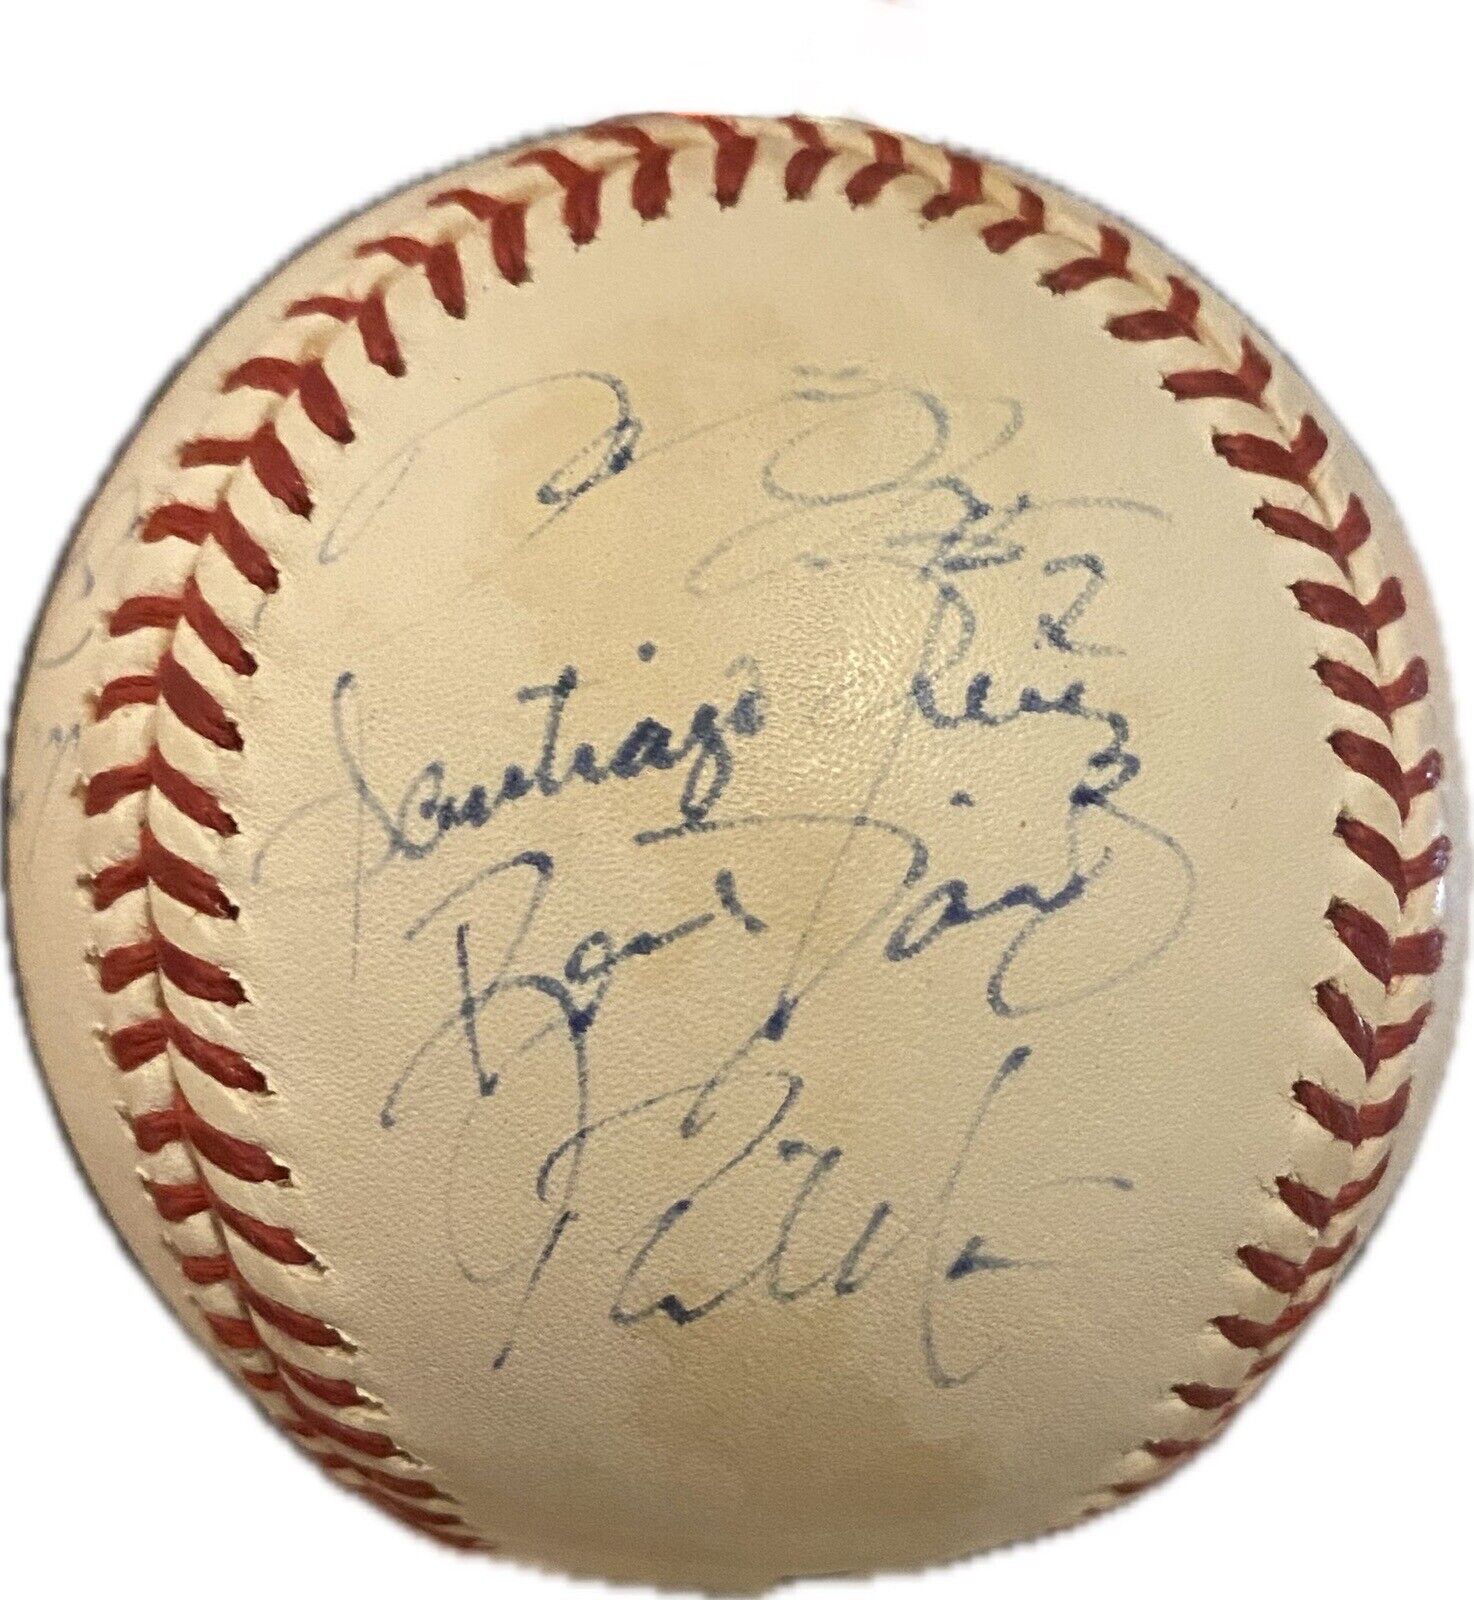 2001 San Diego Padres Autographed Baseball (Ryan Klesko, Phil Nevin, & 10 more)